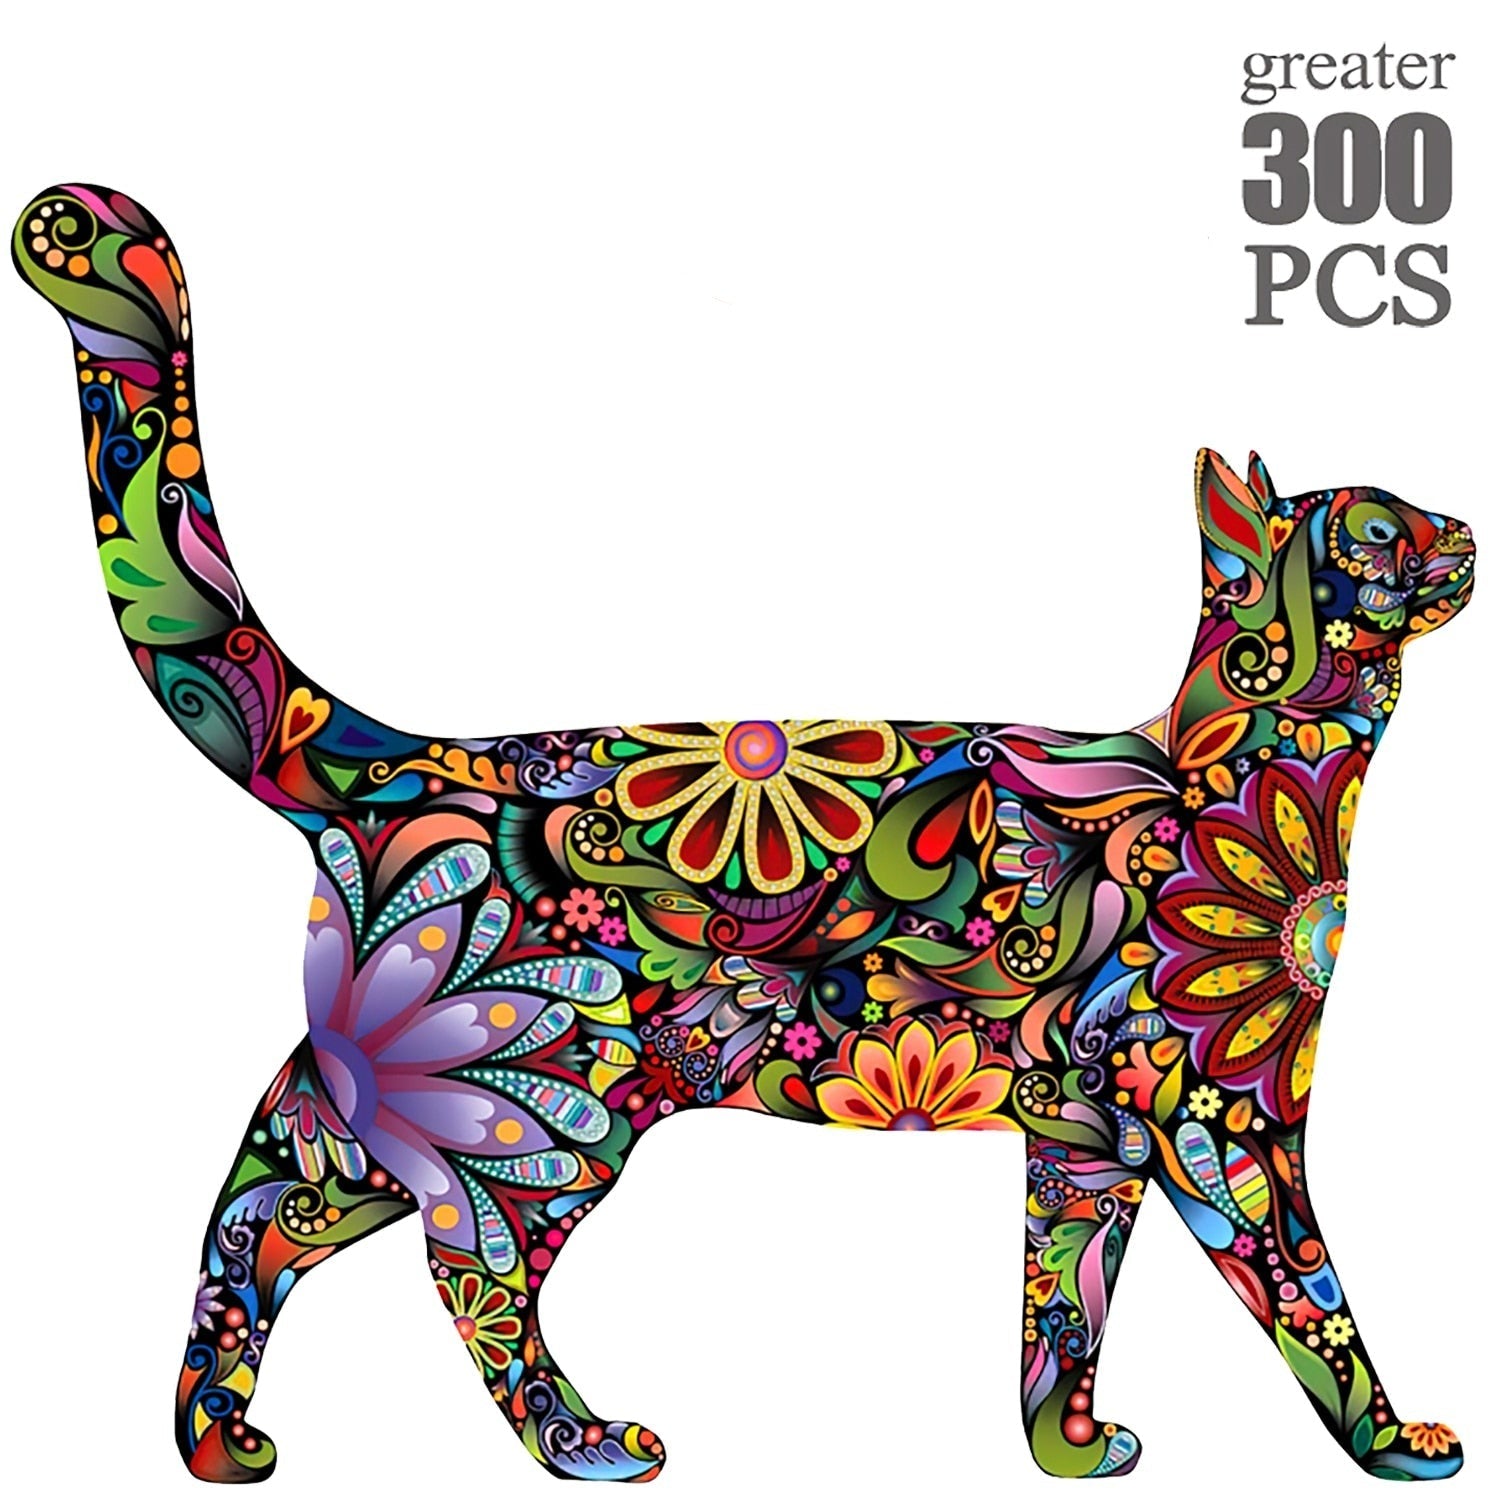 Flower Cat Jigsaw Puzzle - 300 pieces